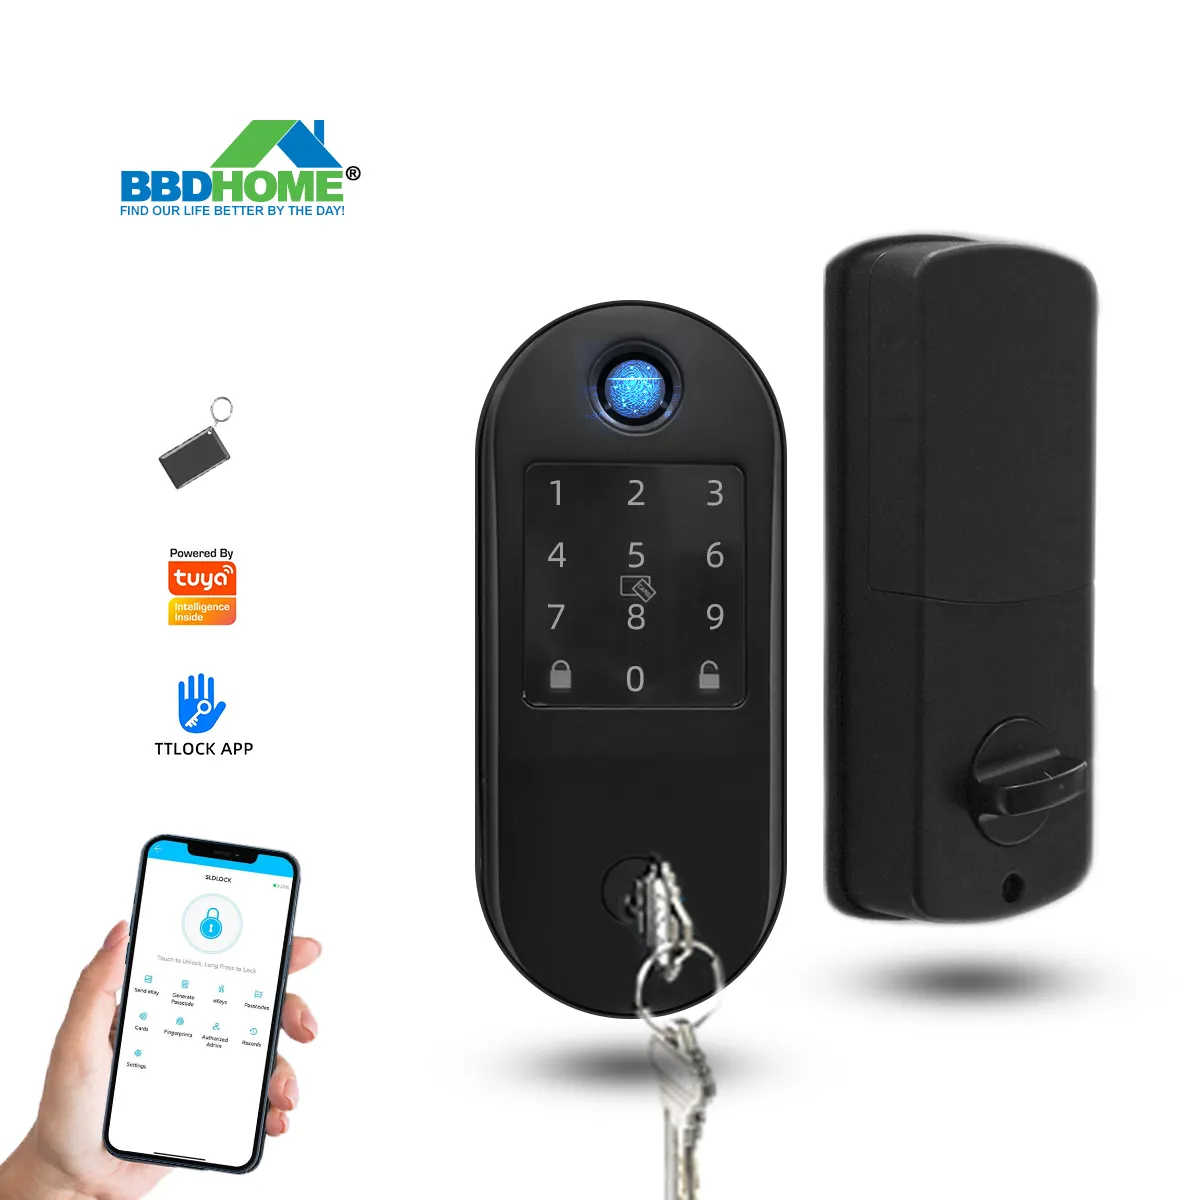 BBDHOME fingerprint ttlock smart lock cerradura electronica biometric intelligent digital smart deadbolt door lock